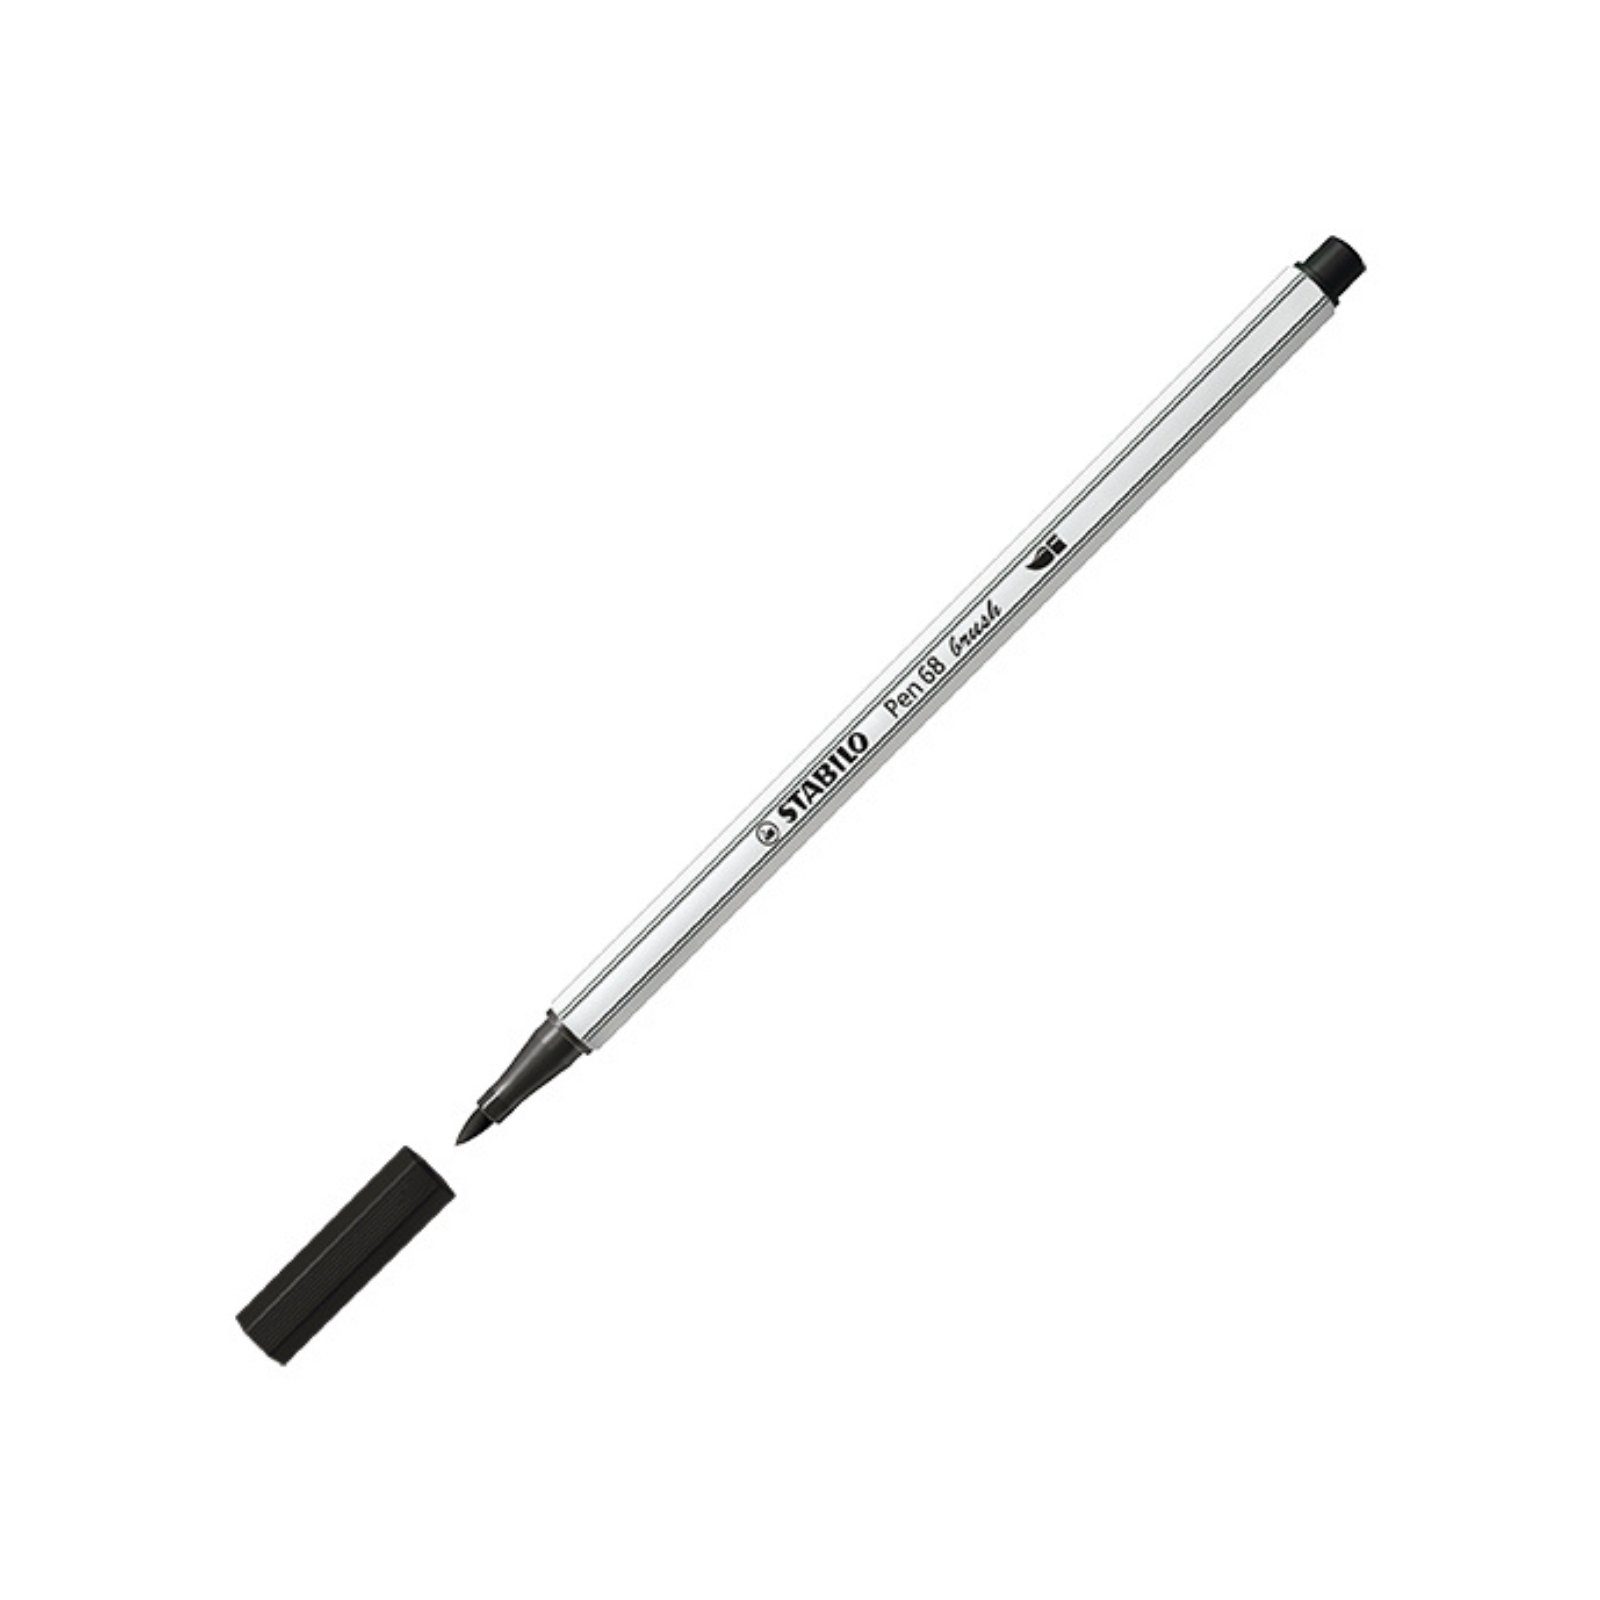 ARTY - Premium-Filzstift STABILO Pinselstift STABILO 68 Pen brush 30er Metalletui